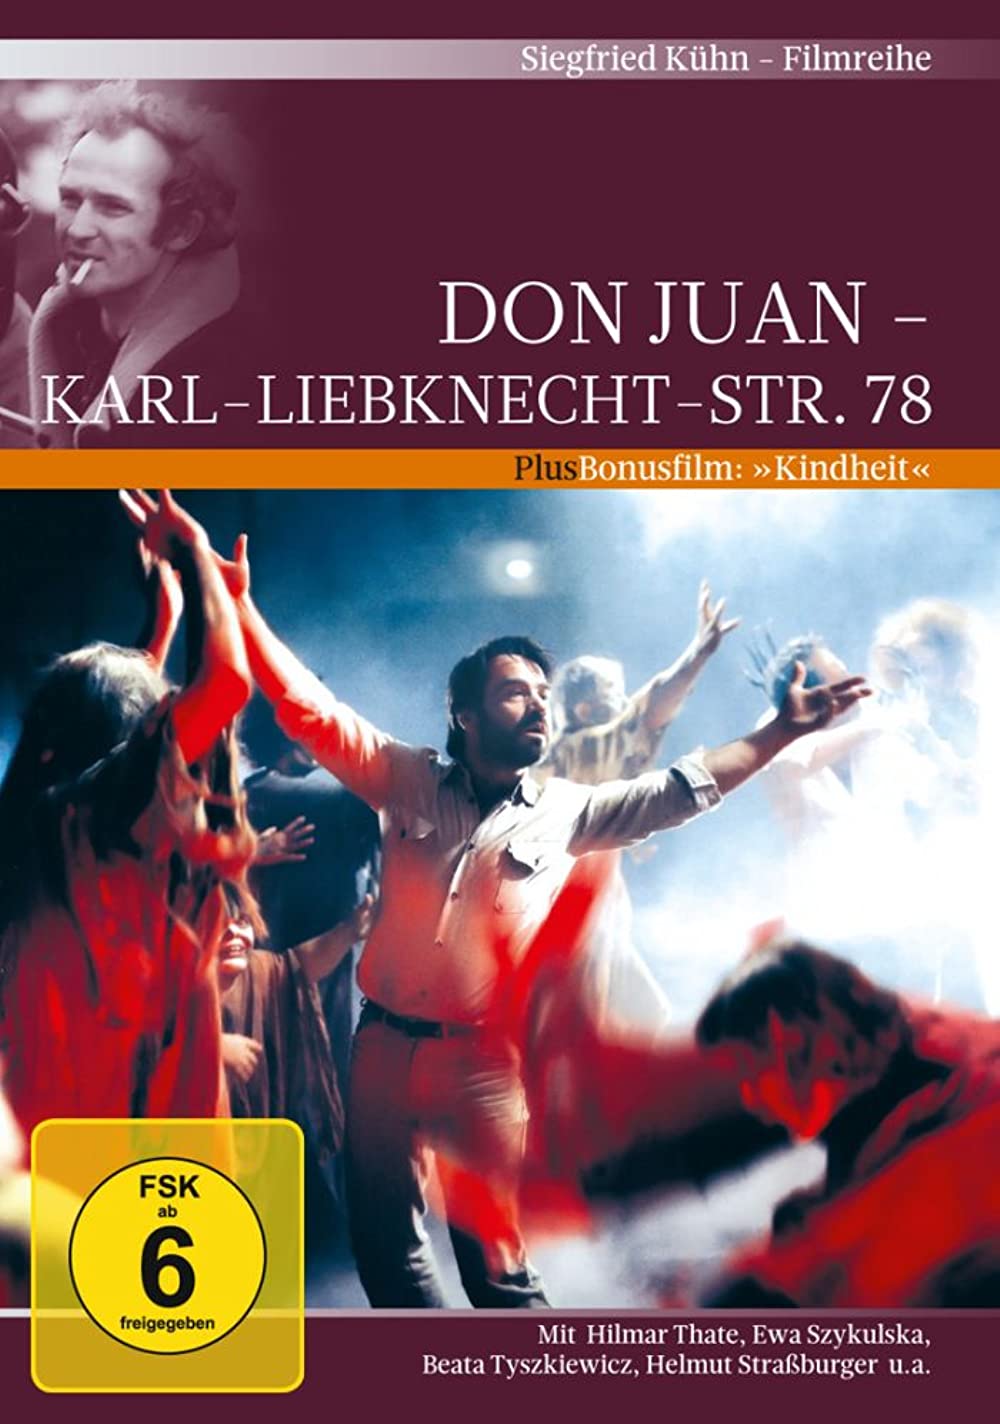 Filmbeschreibung zu Don Juan - Karl-Liebknecht-Str. 78